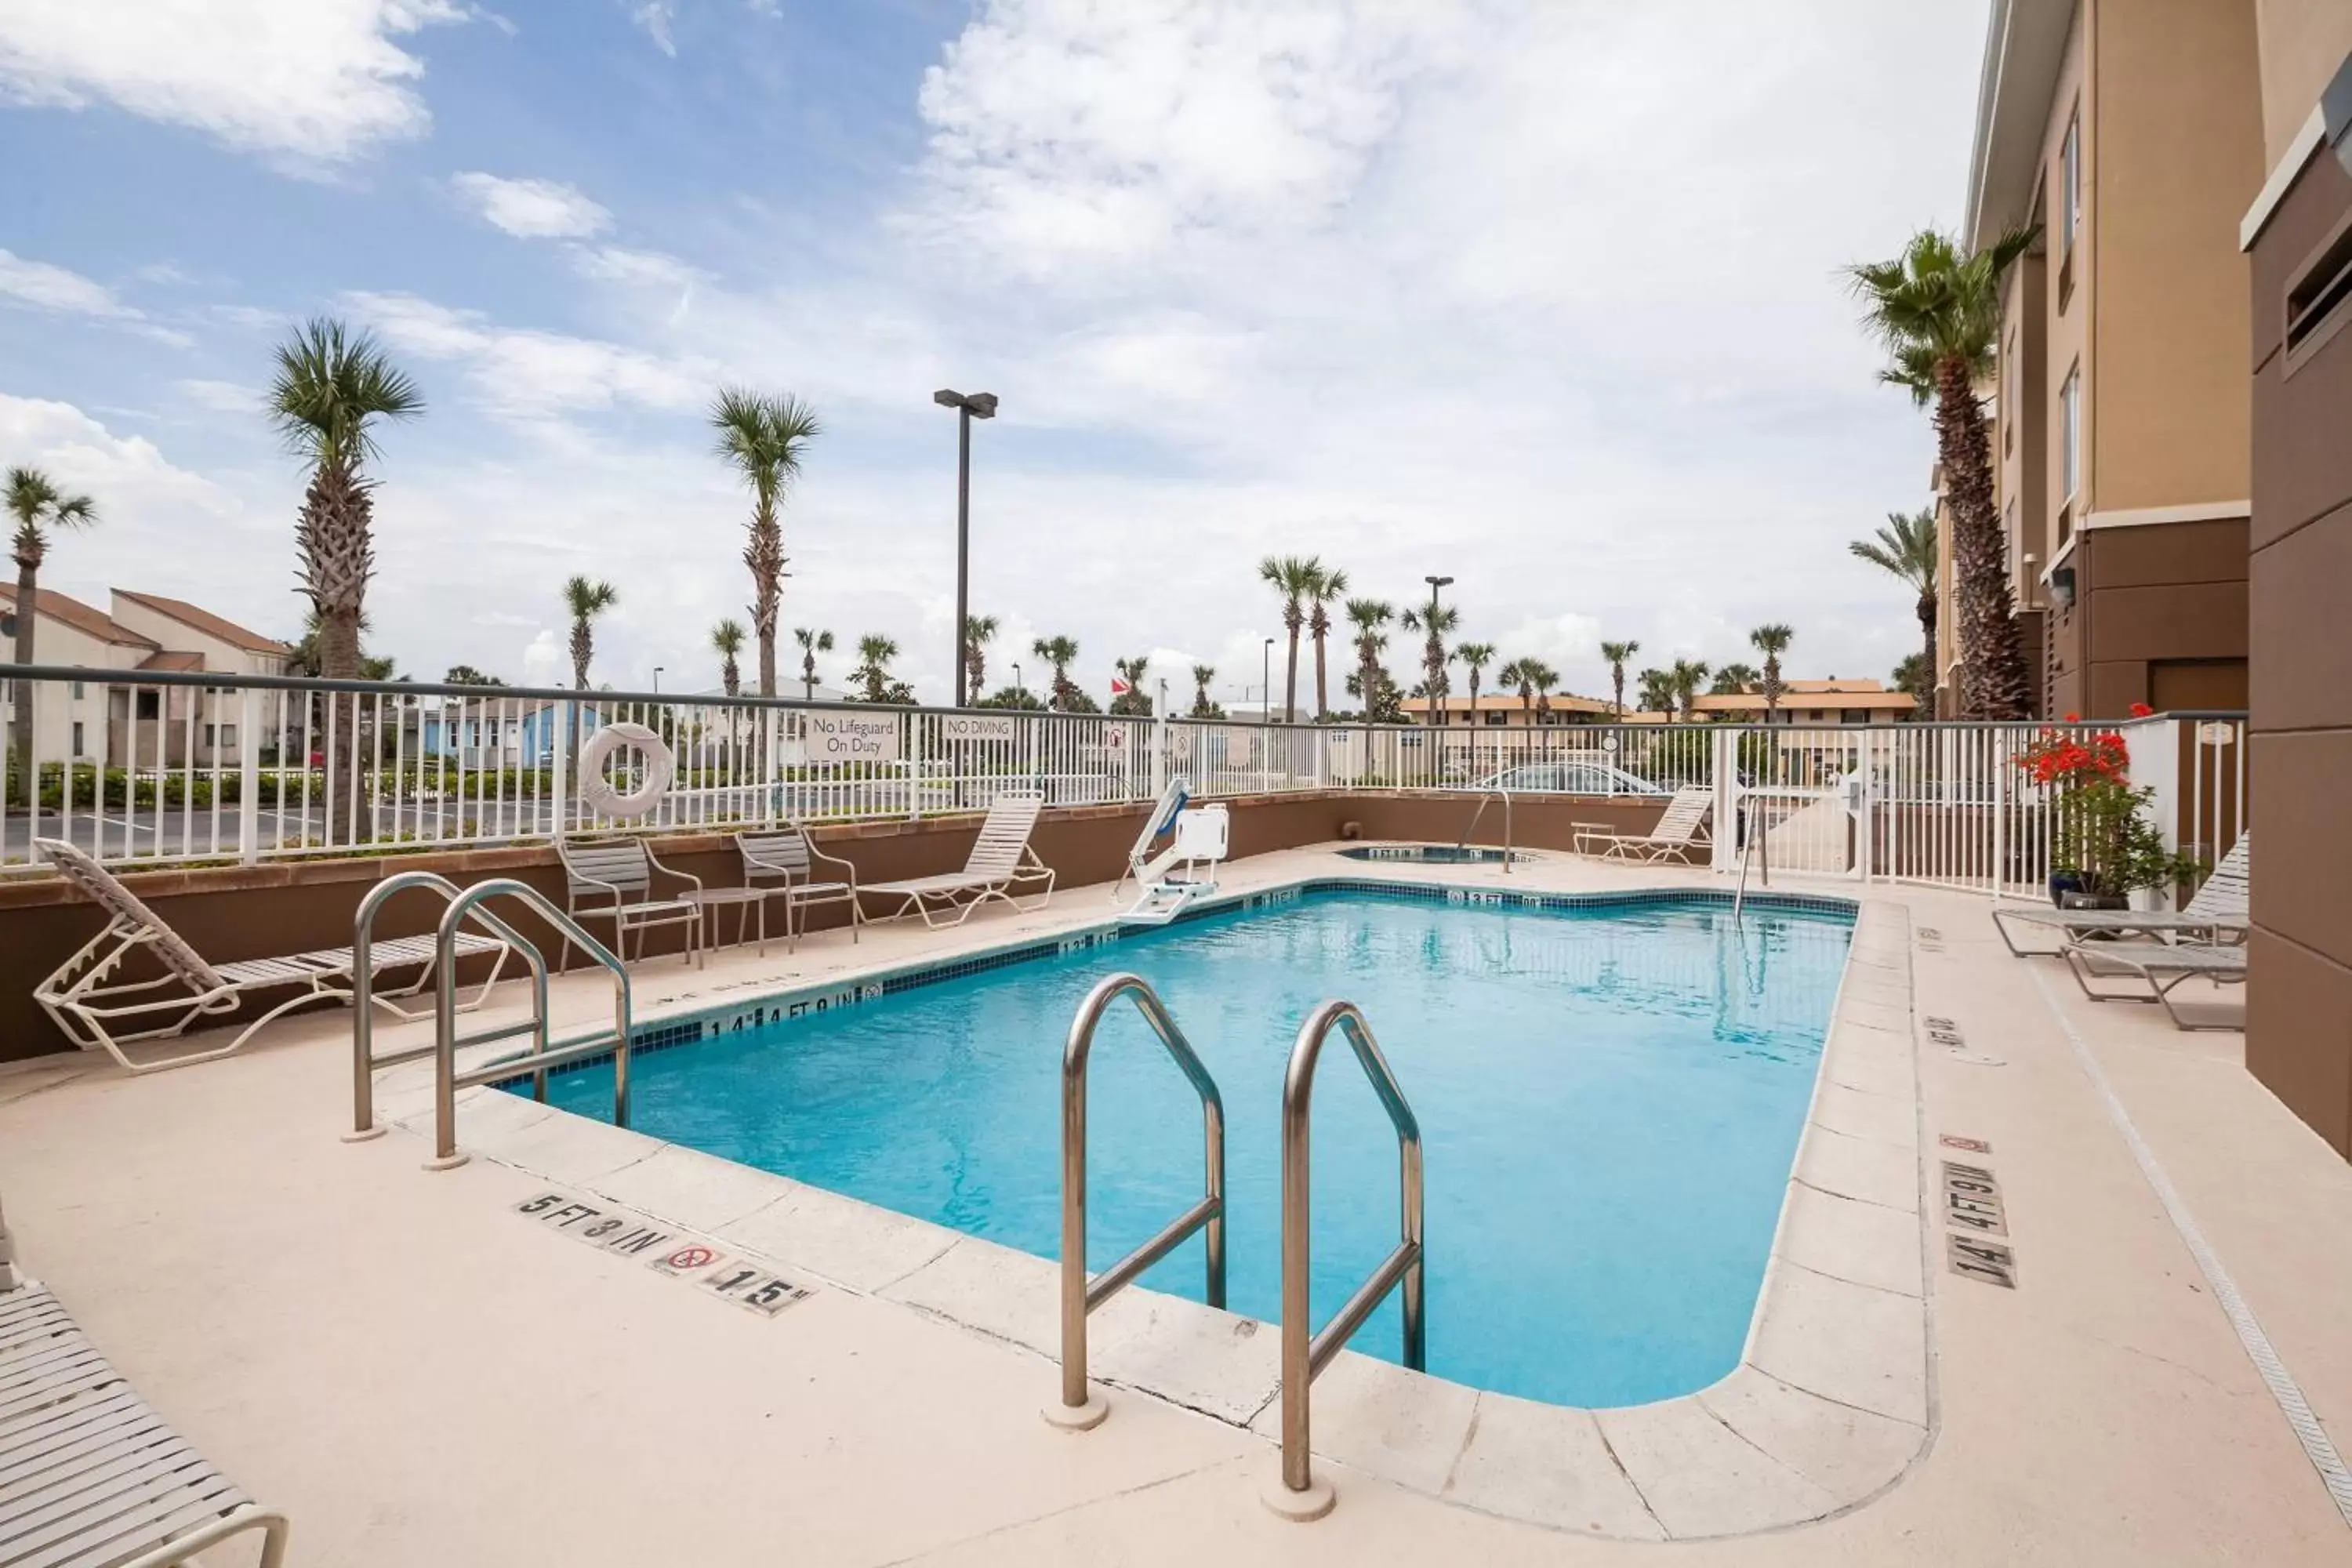 Swimming Pool in Fairfield Inn and Suites Jacksonville Beach